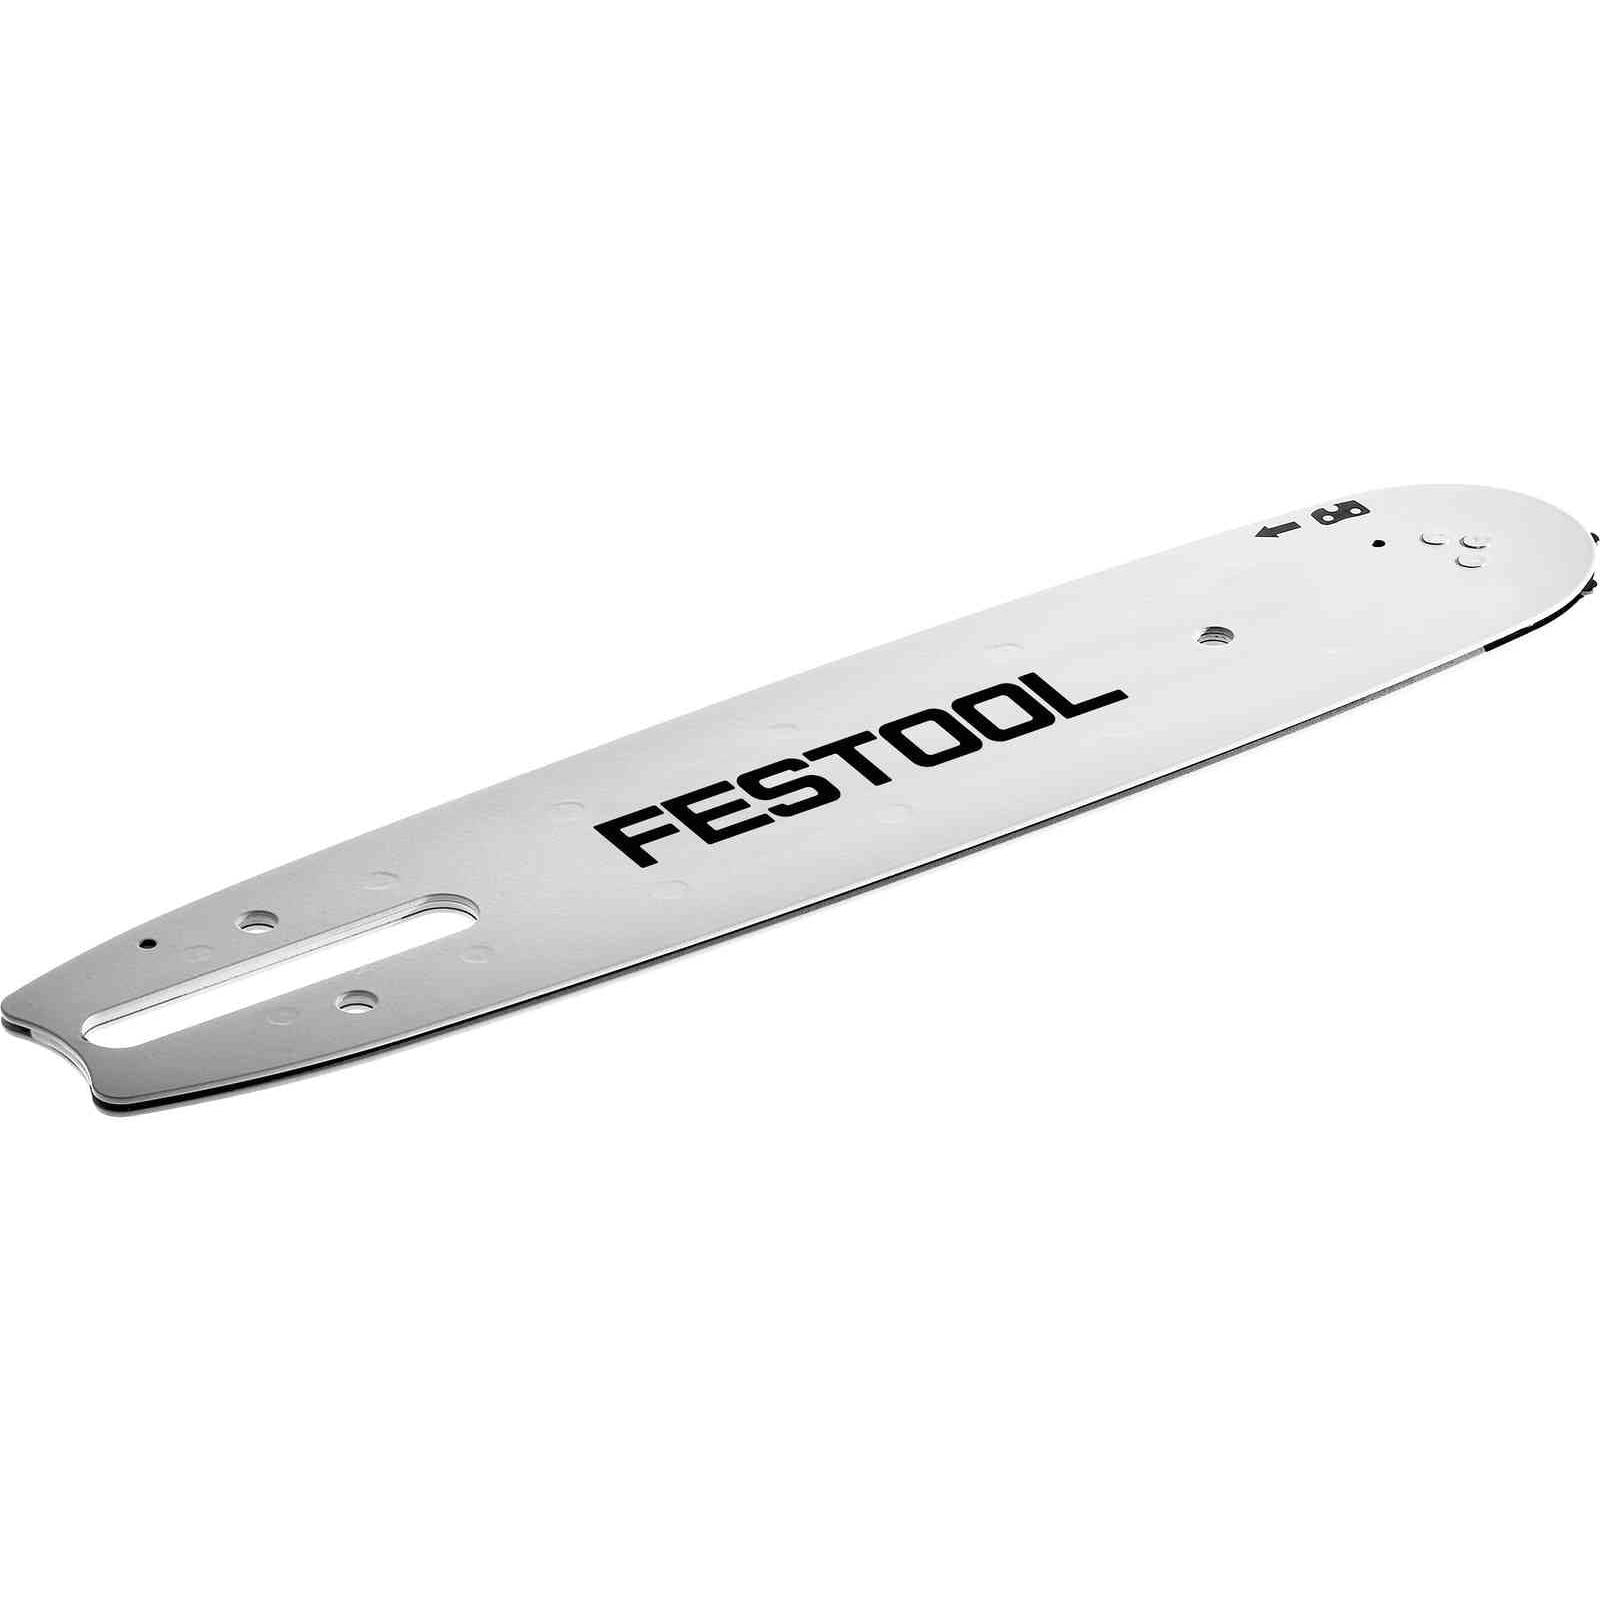 Festool Blade GB 13"-IS 330 769089 Power Tool Services